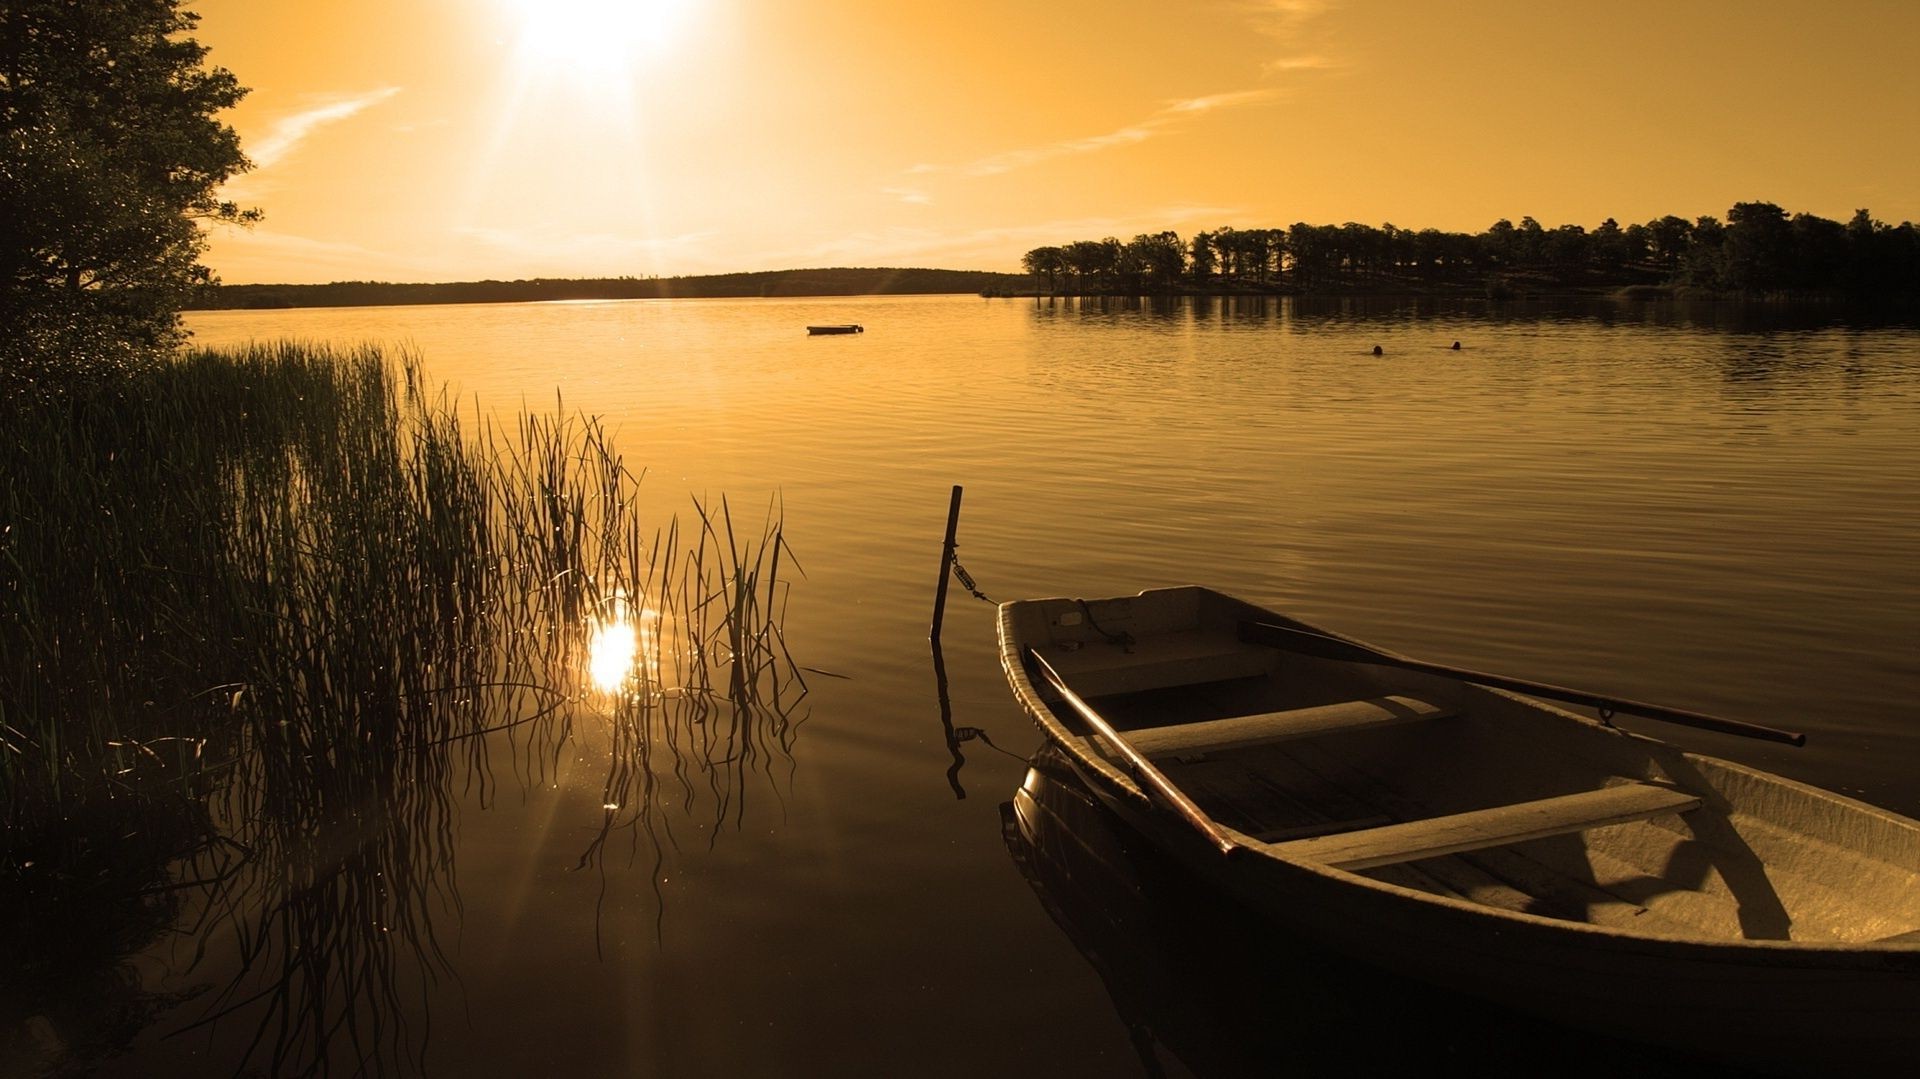 the sunset and sunrise sunset water dawn lake reflection evening dusk river sun boat beach watercraft placid canoe